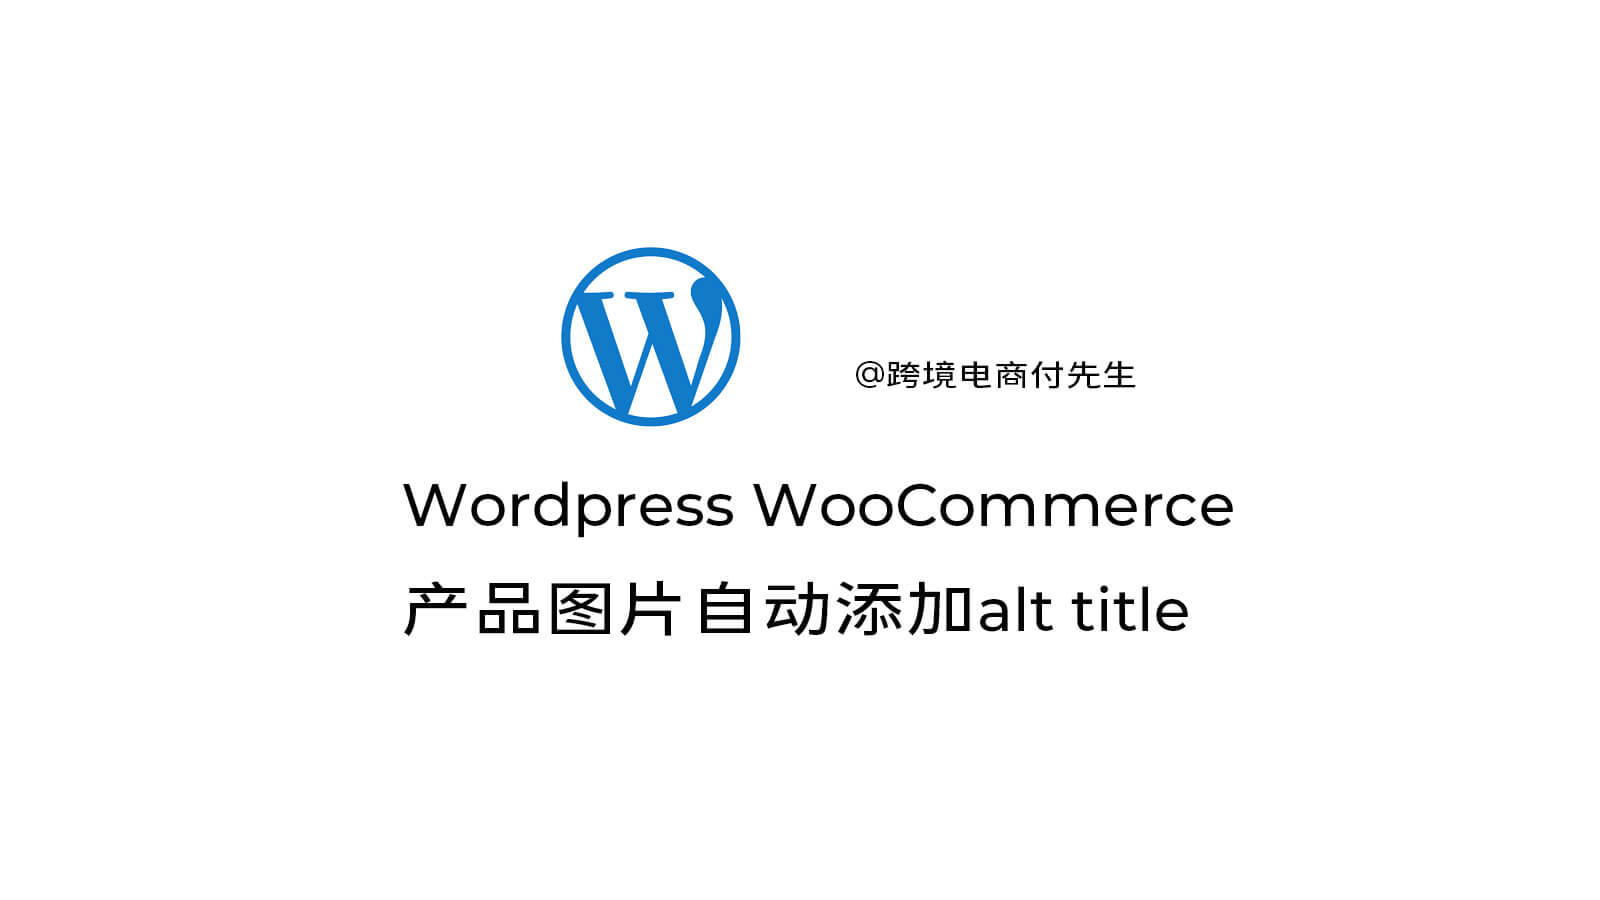 WordPress WooCommerce产品图片自动添加alt title